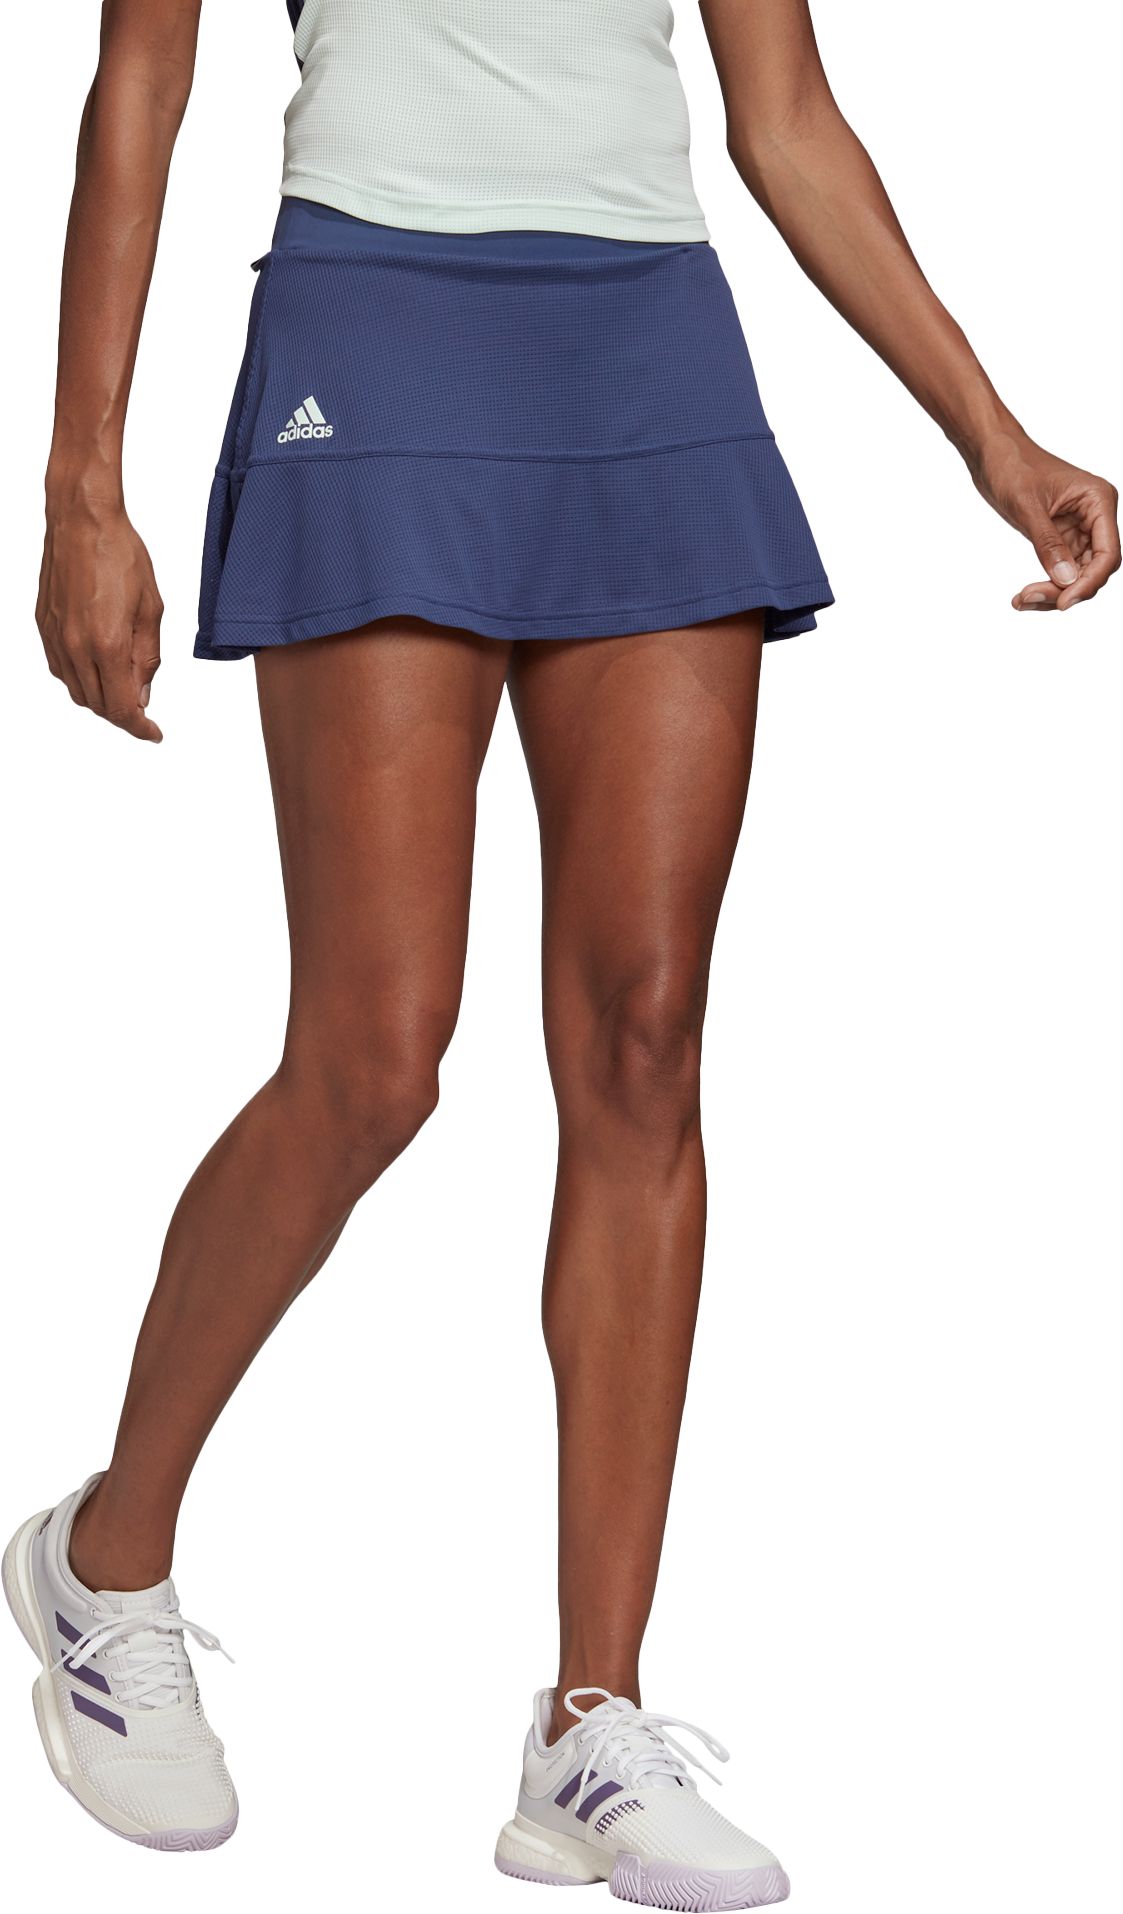 adidas womens tennis clothes